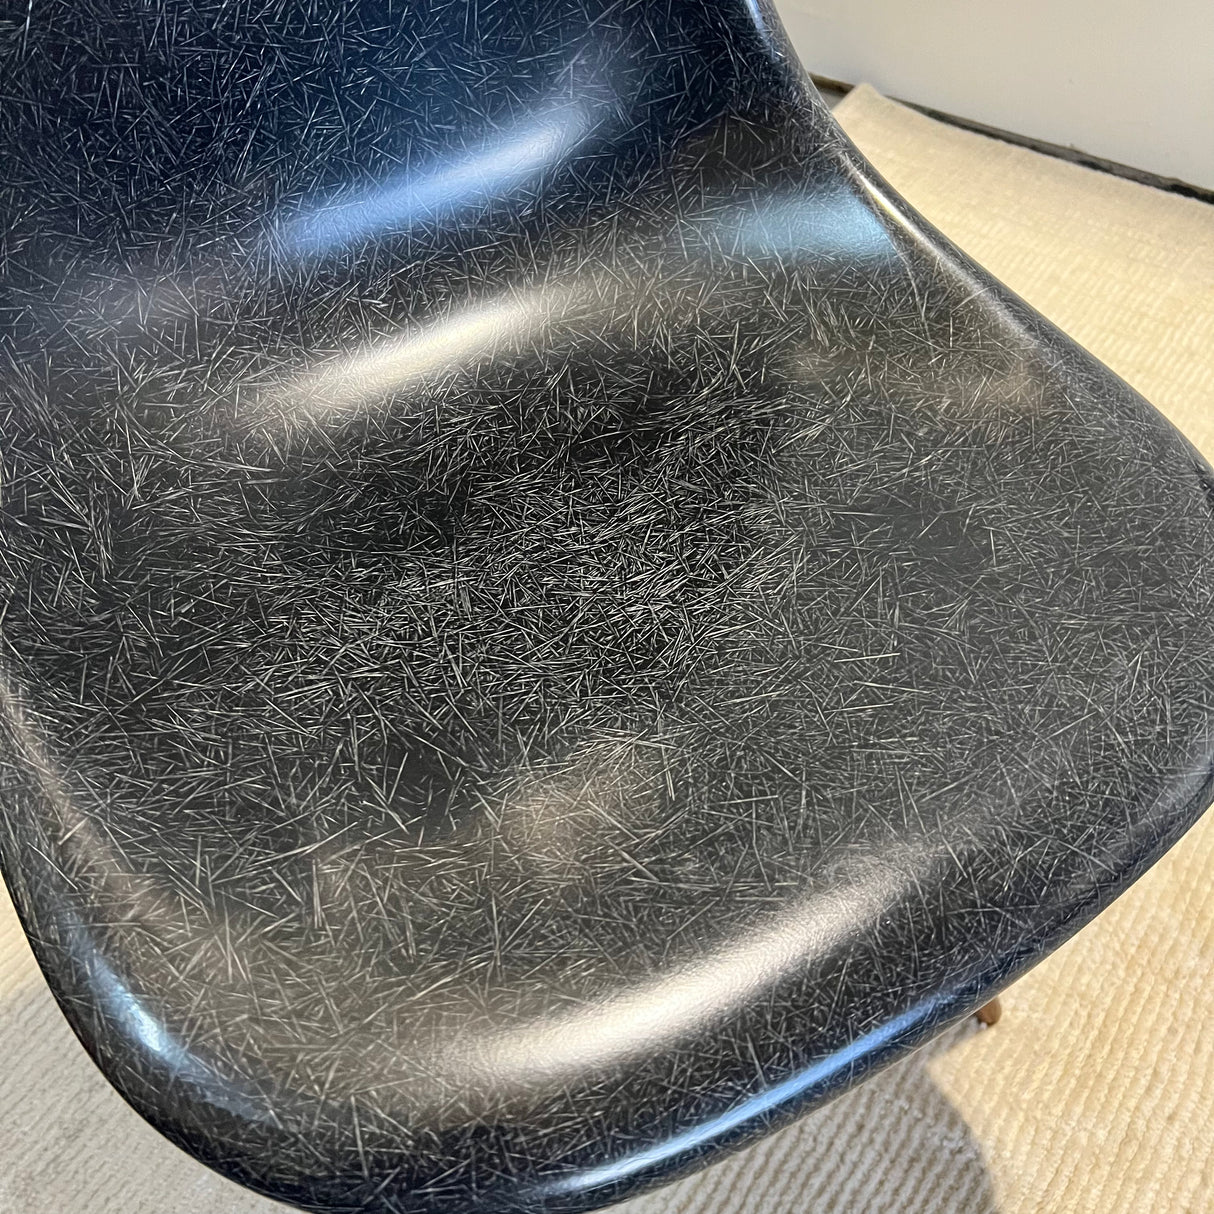 Herman Miller Eames Molded Fiberglass Side Chair  (Retail $3600+)